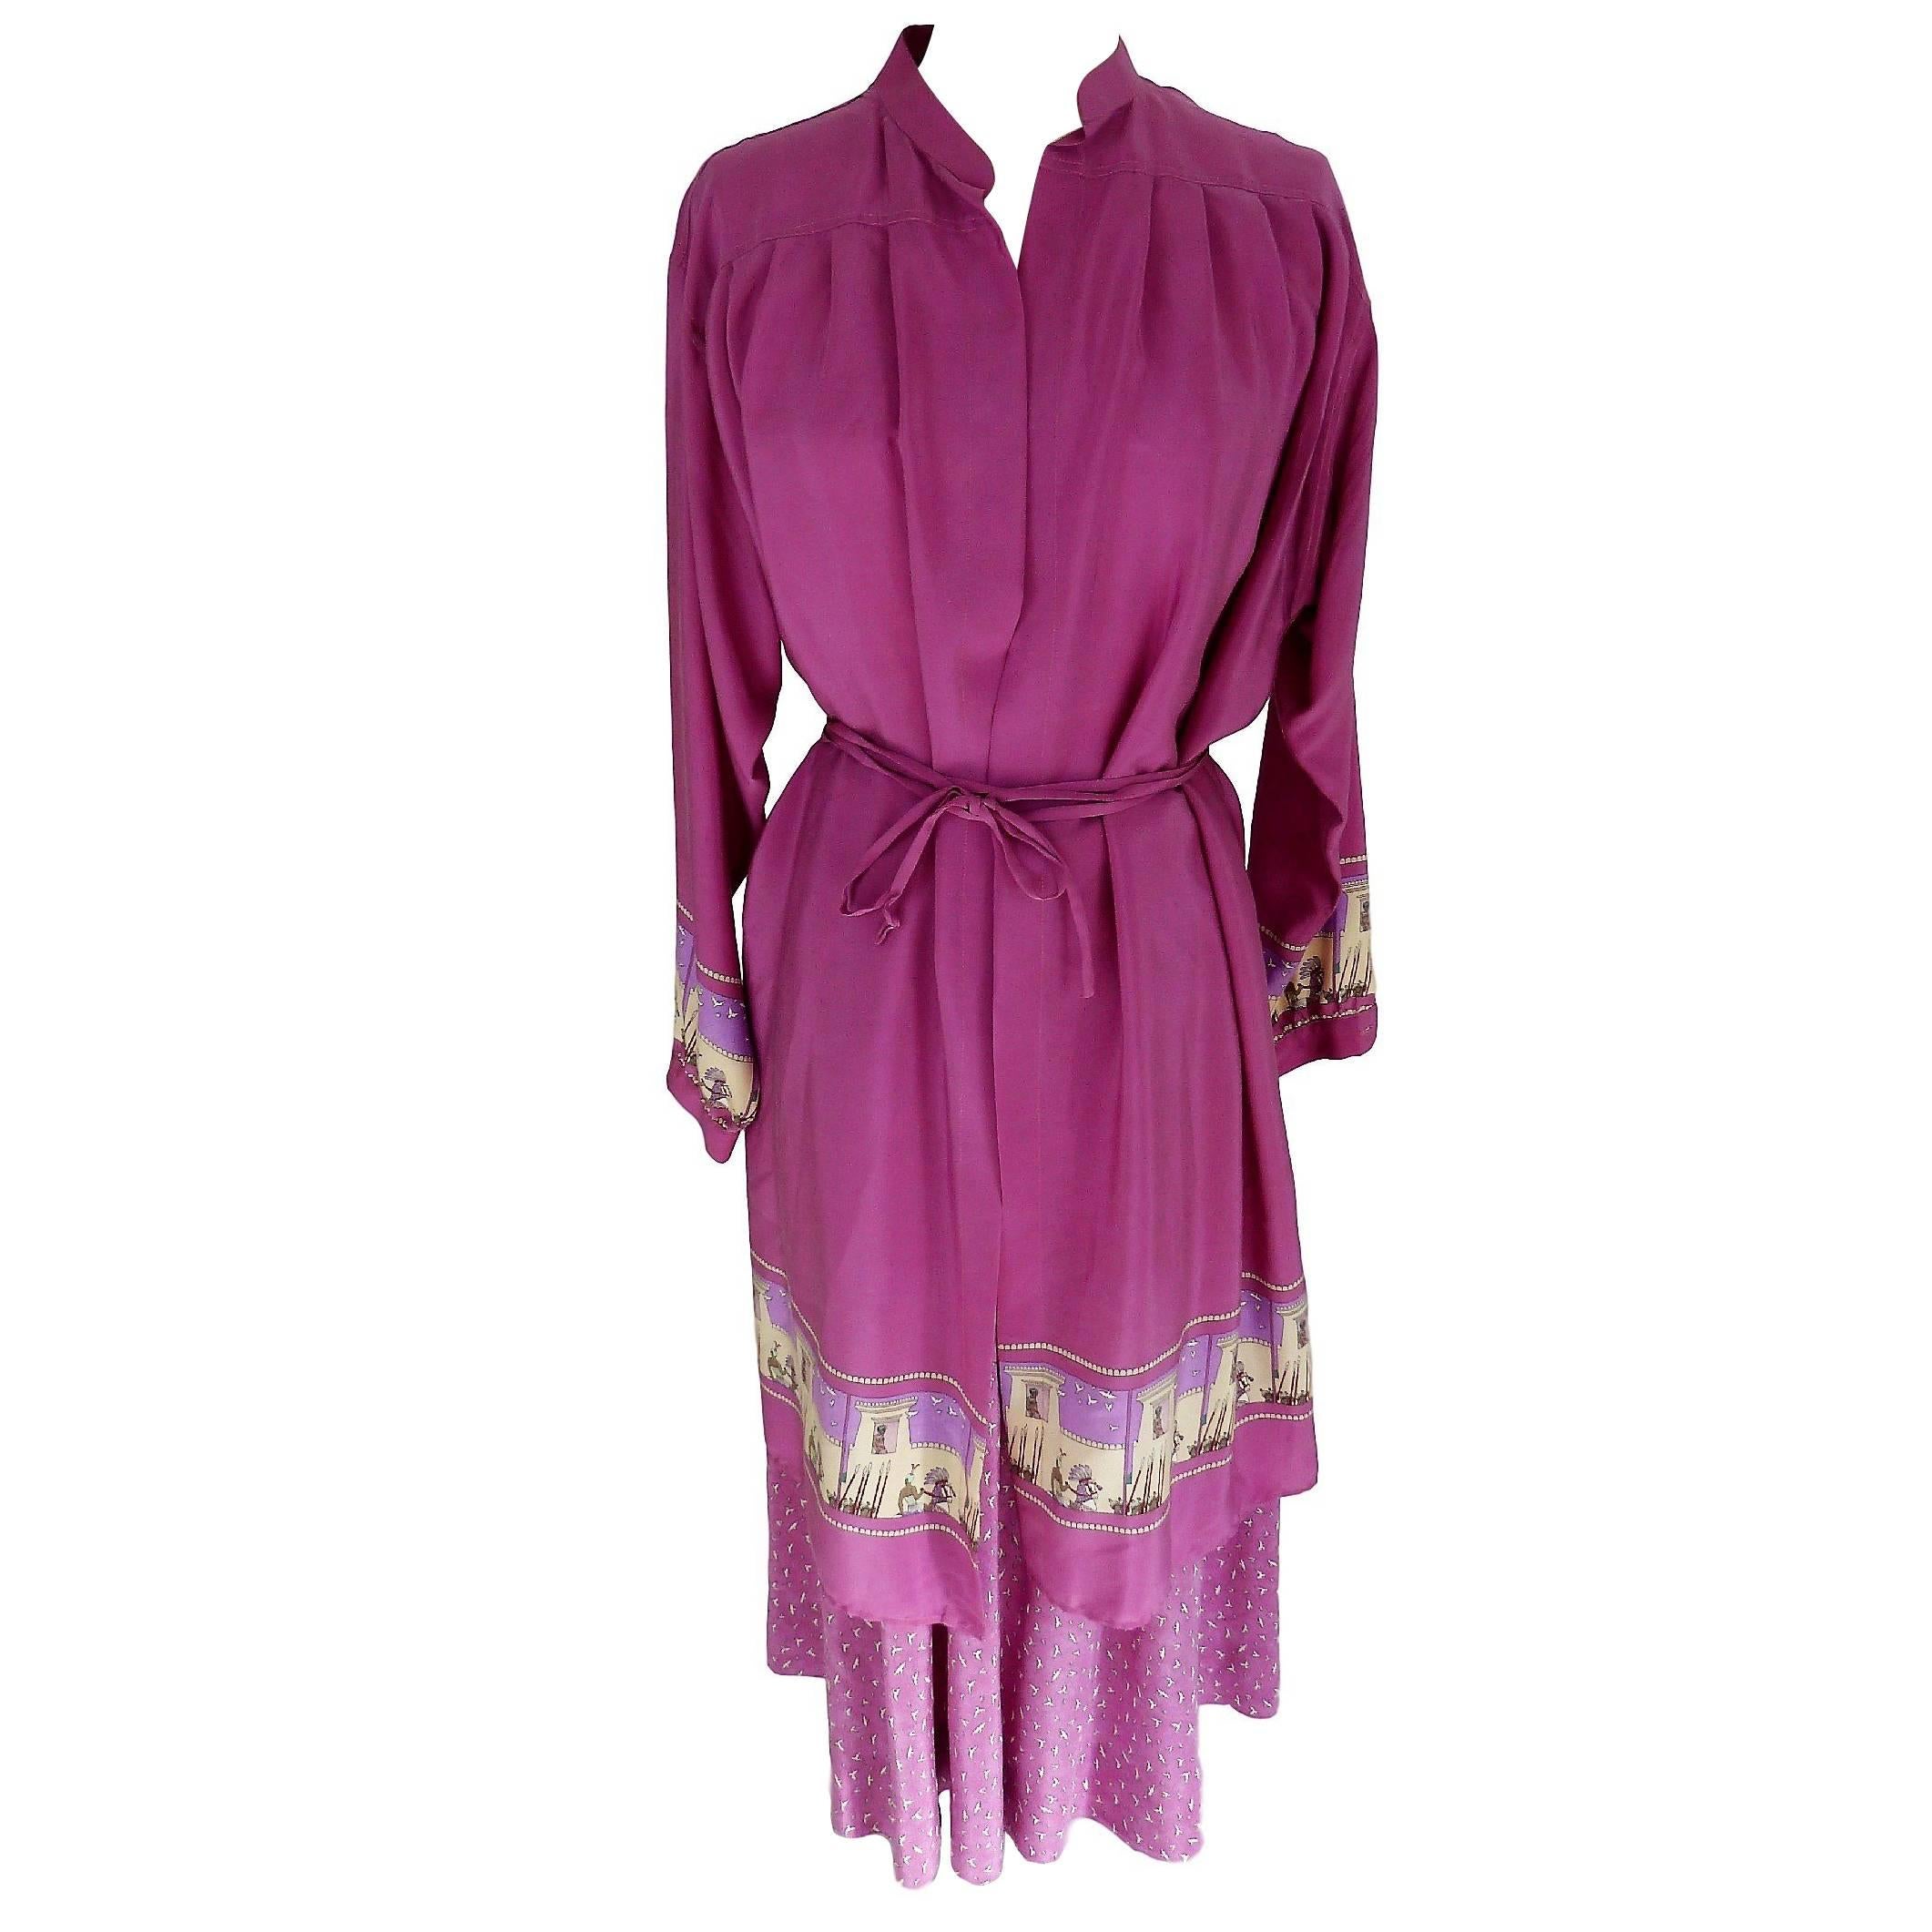 Marina Ferrari 1970s dress set 100% silk jacket blouse and skirt pink size 42 For Sale